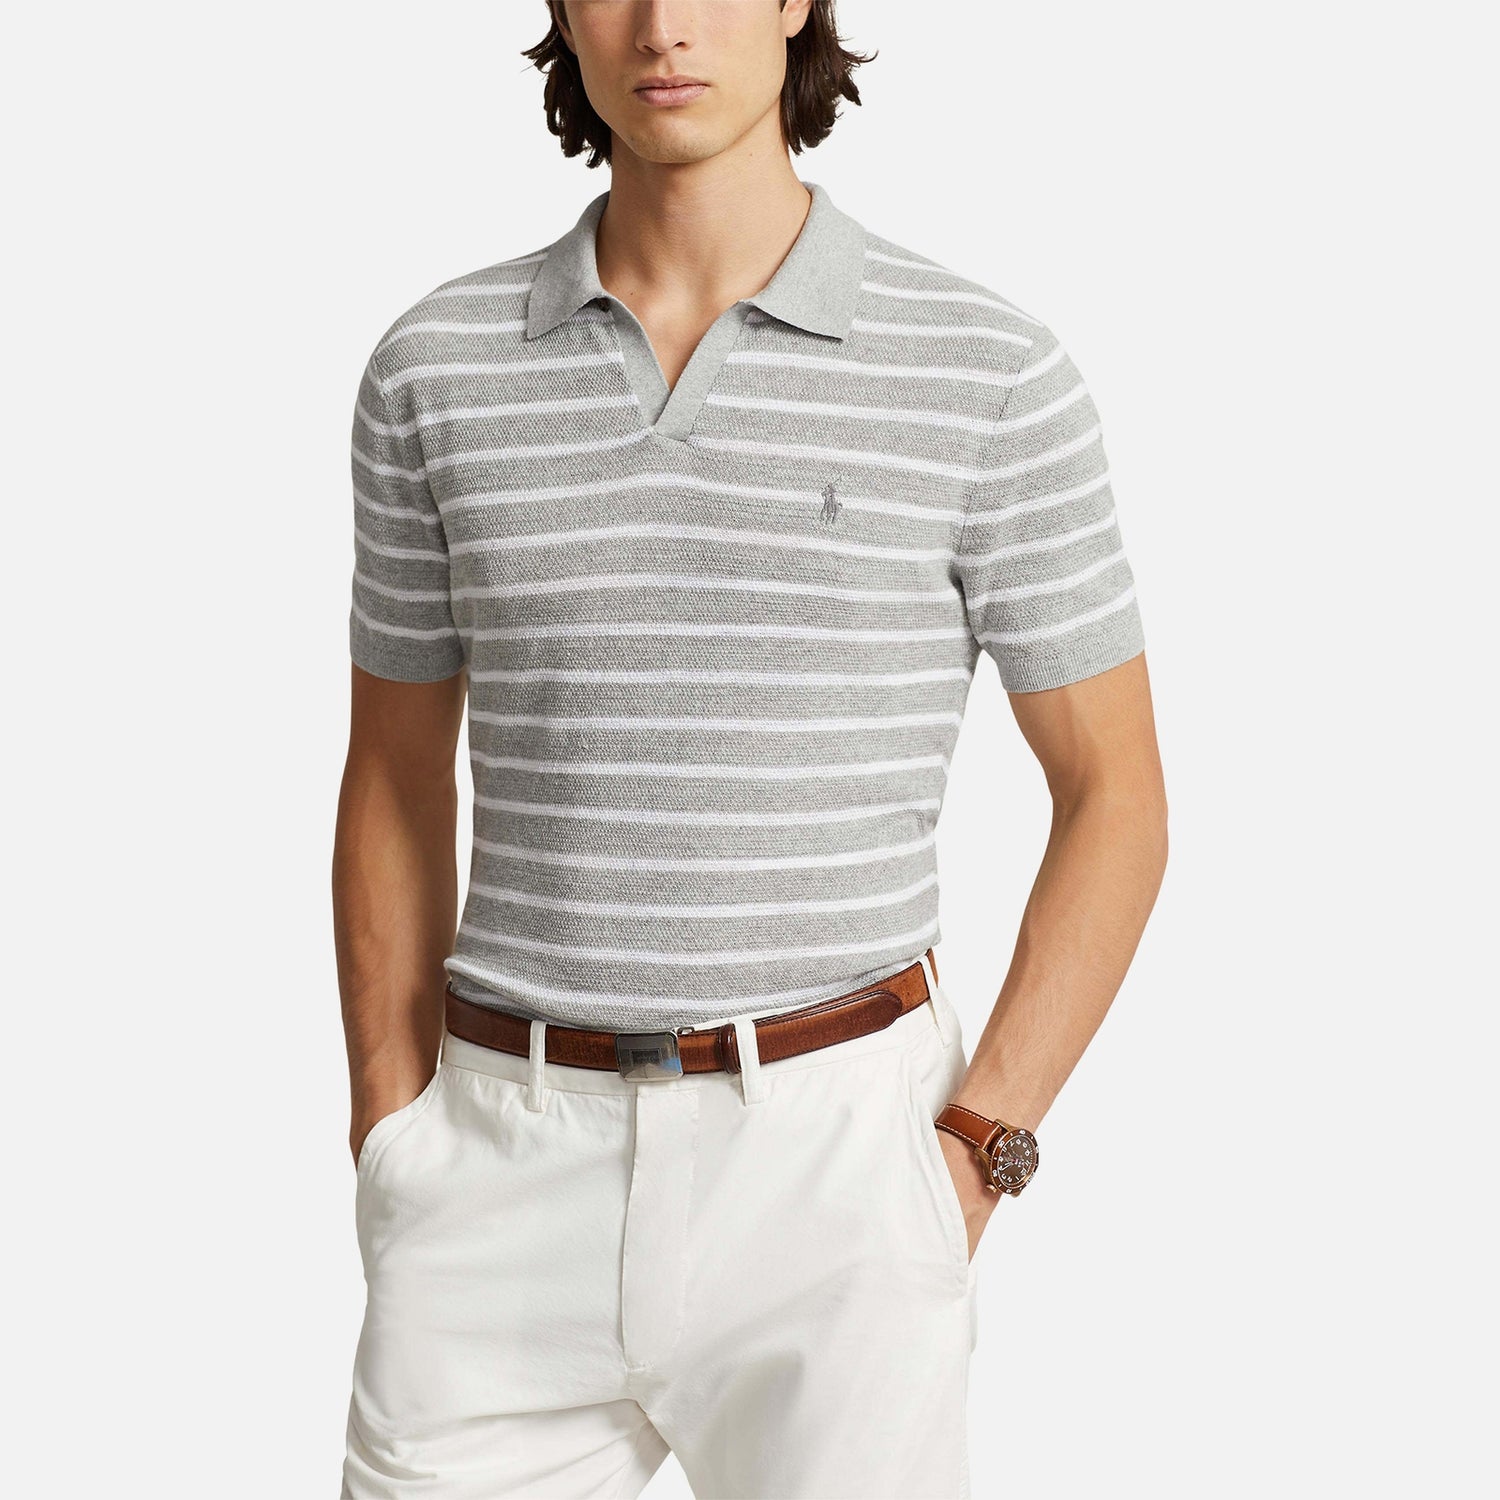 Polo Ralph Lauren Striped Knit Polo Shirt - S